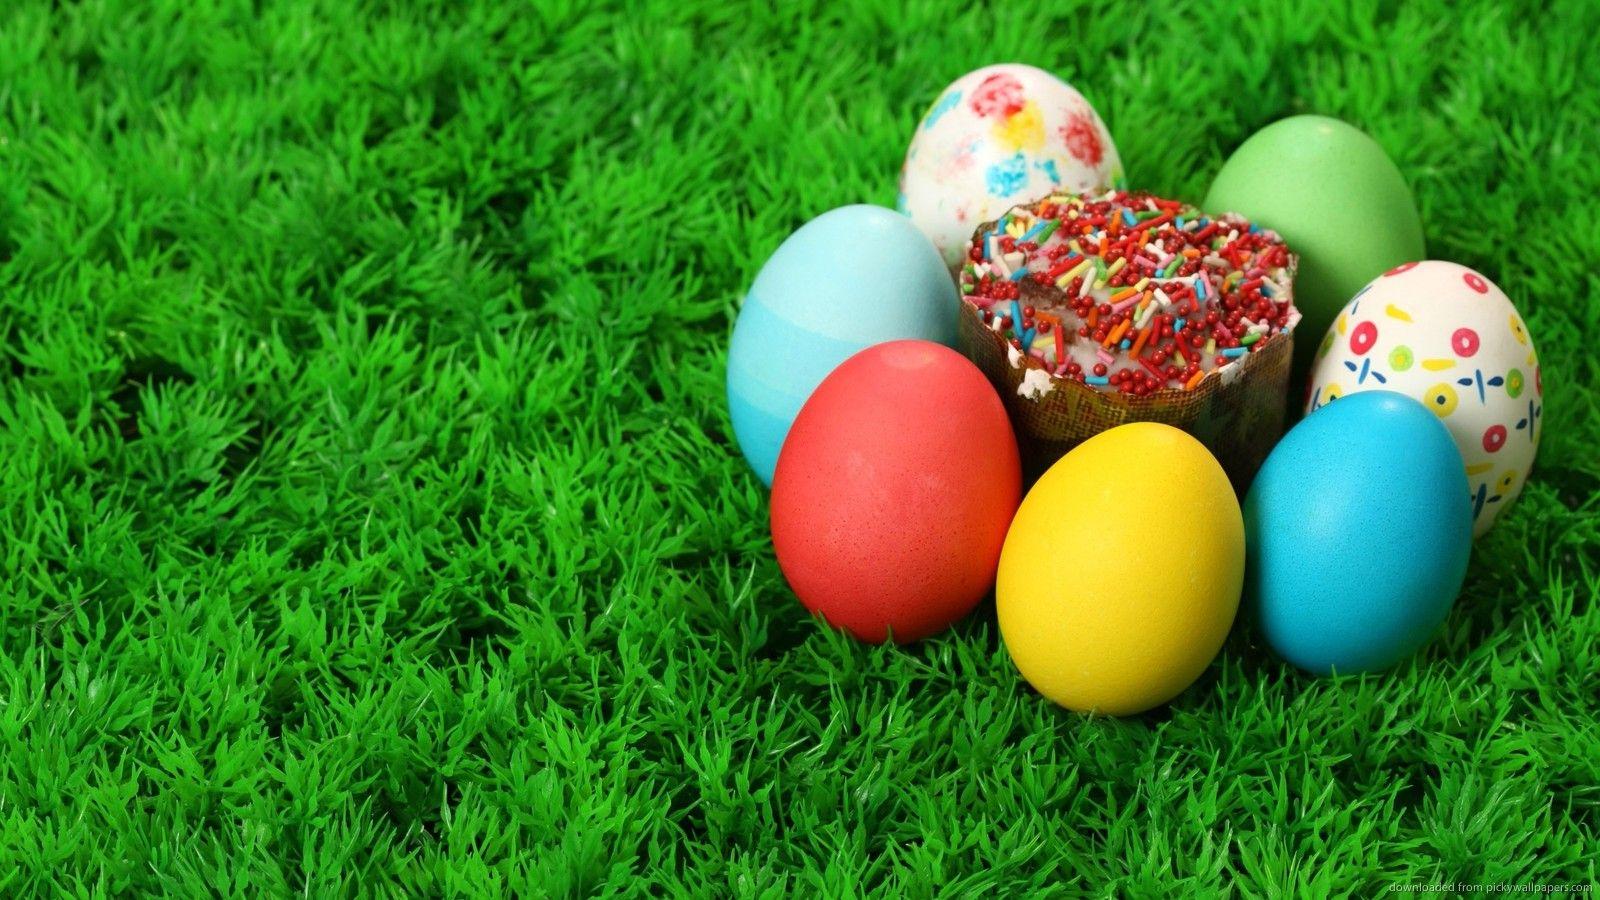 Download 1600x900 Easter Eggs On Artificial Grass Wallpaper